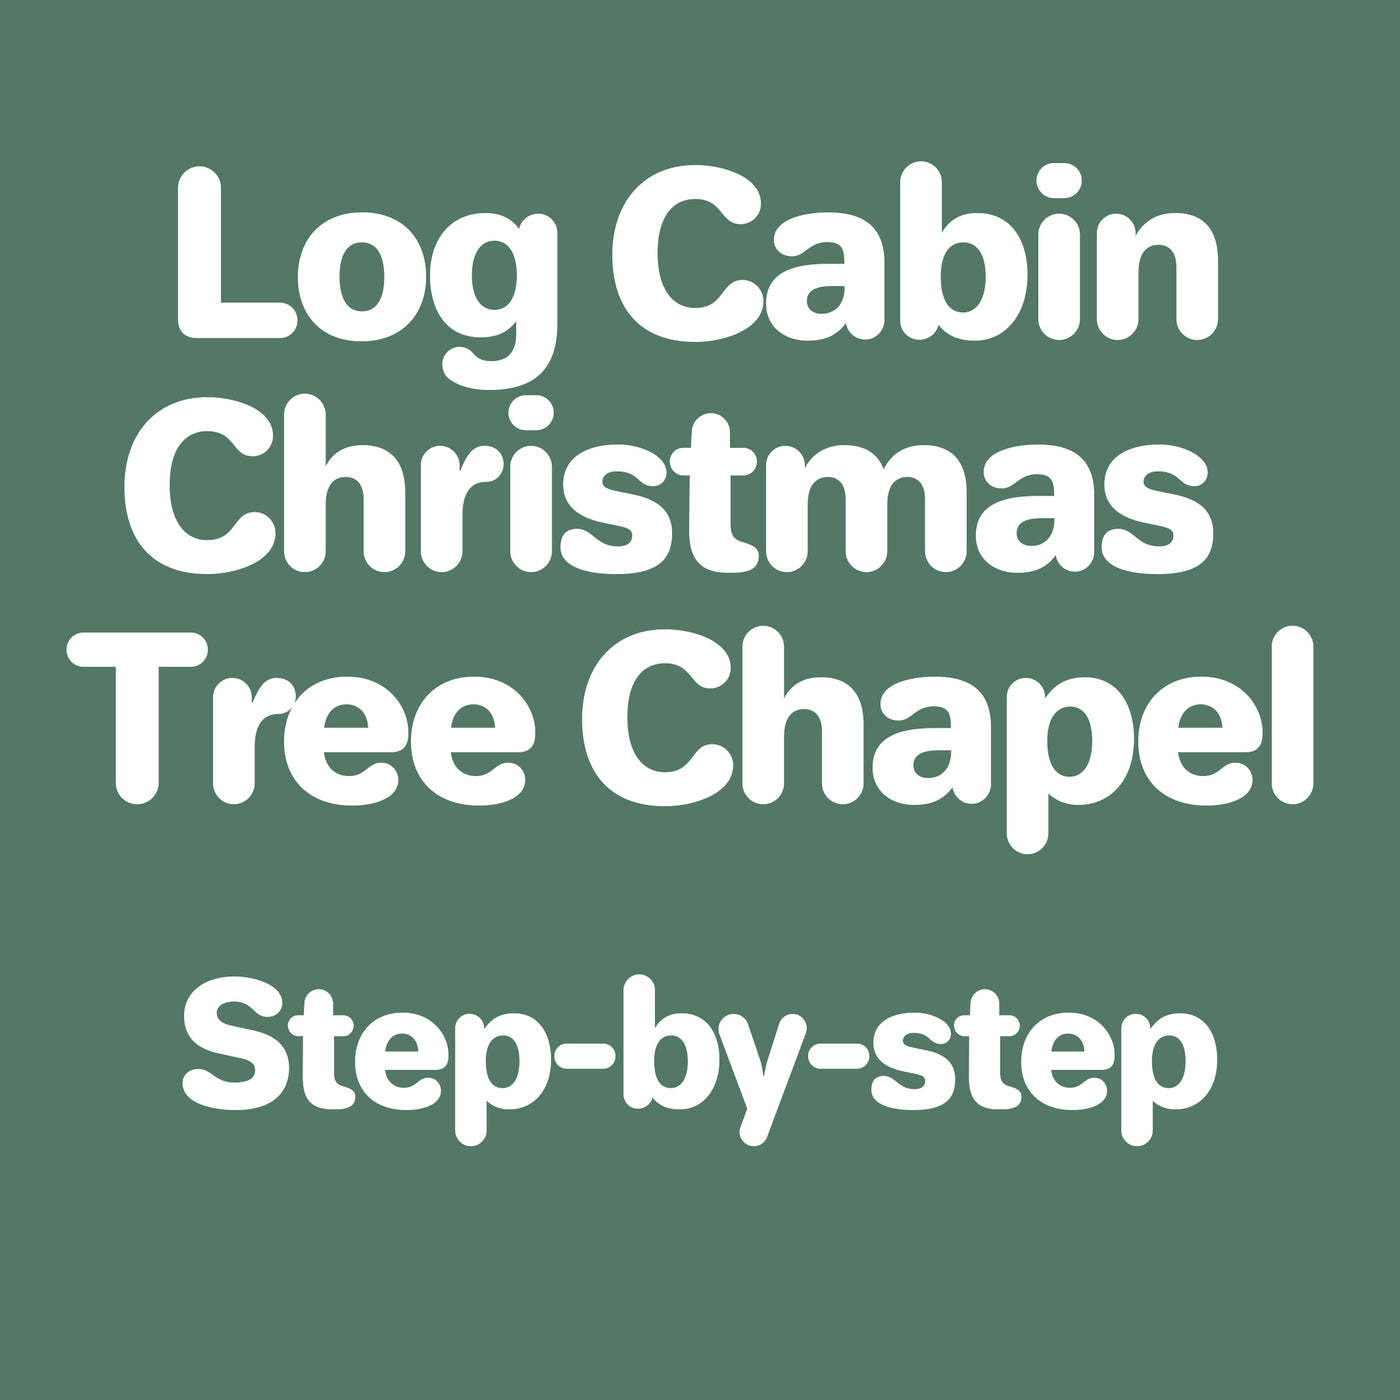 Christmas Tree Chapel